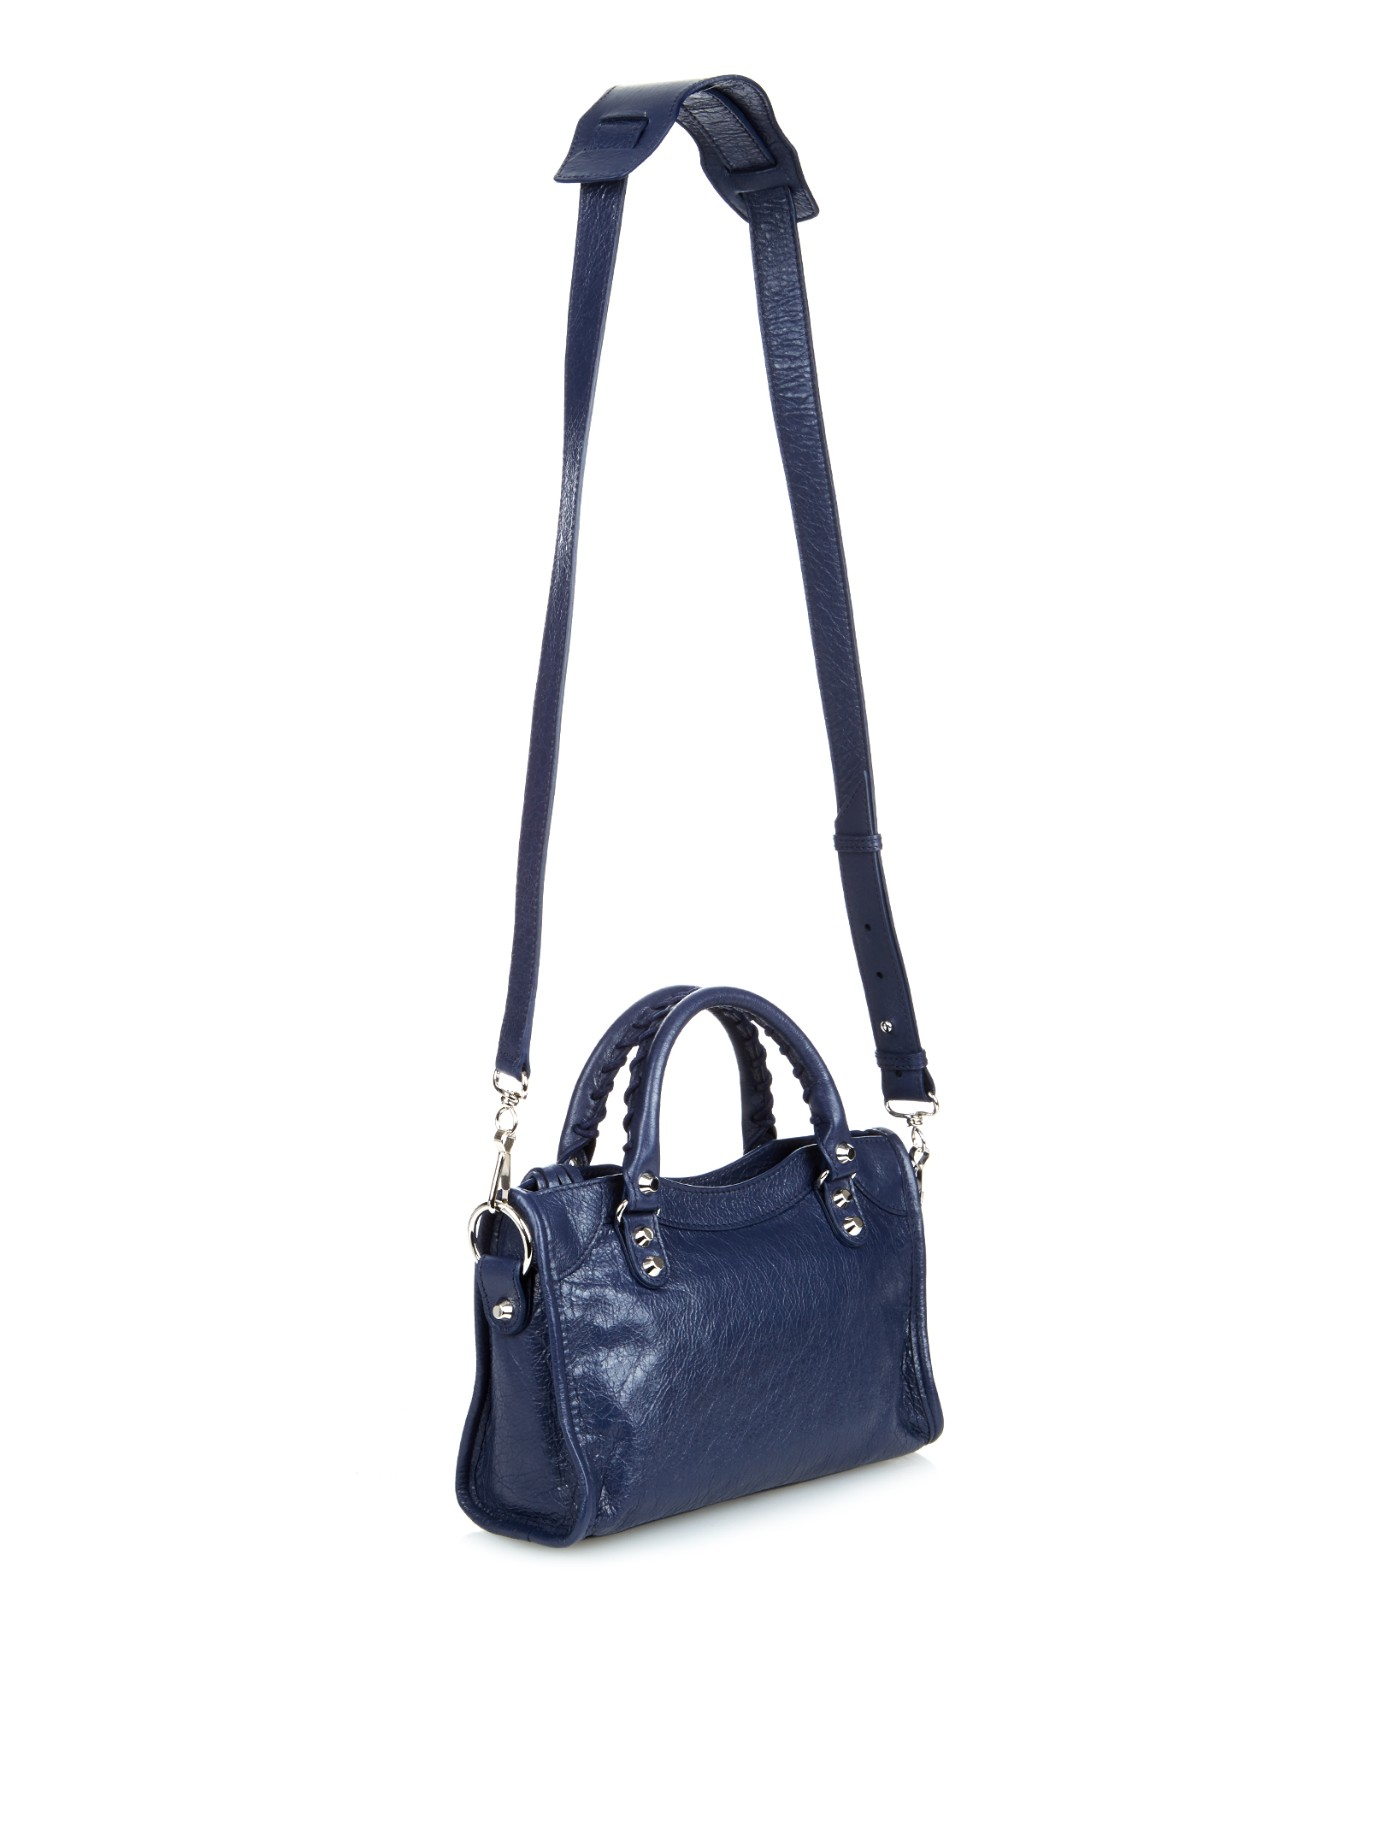 Balenciaga Classic Mini City Leather Cross-body Bag in Navy (Blue) - Lyst